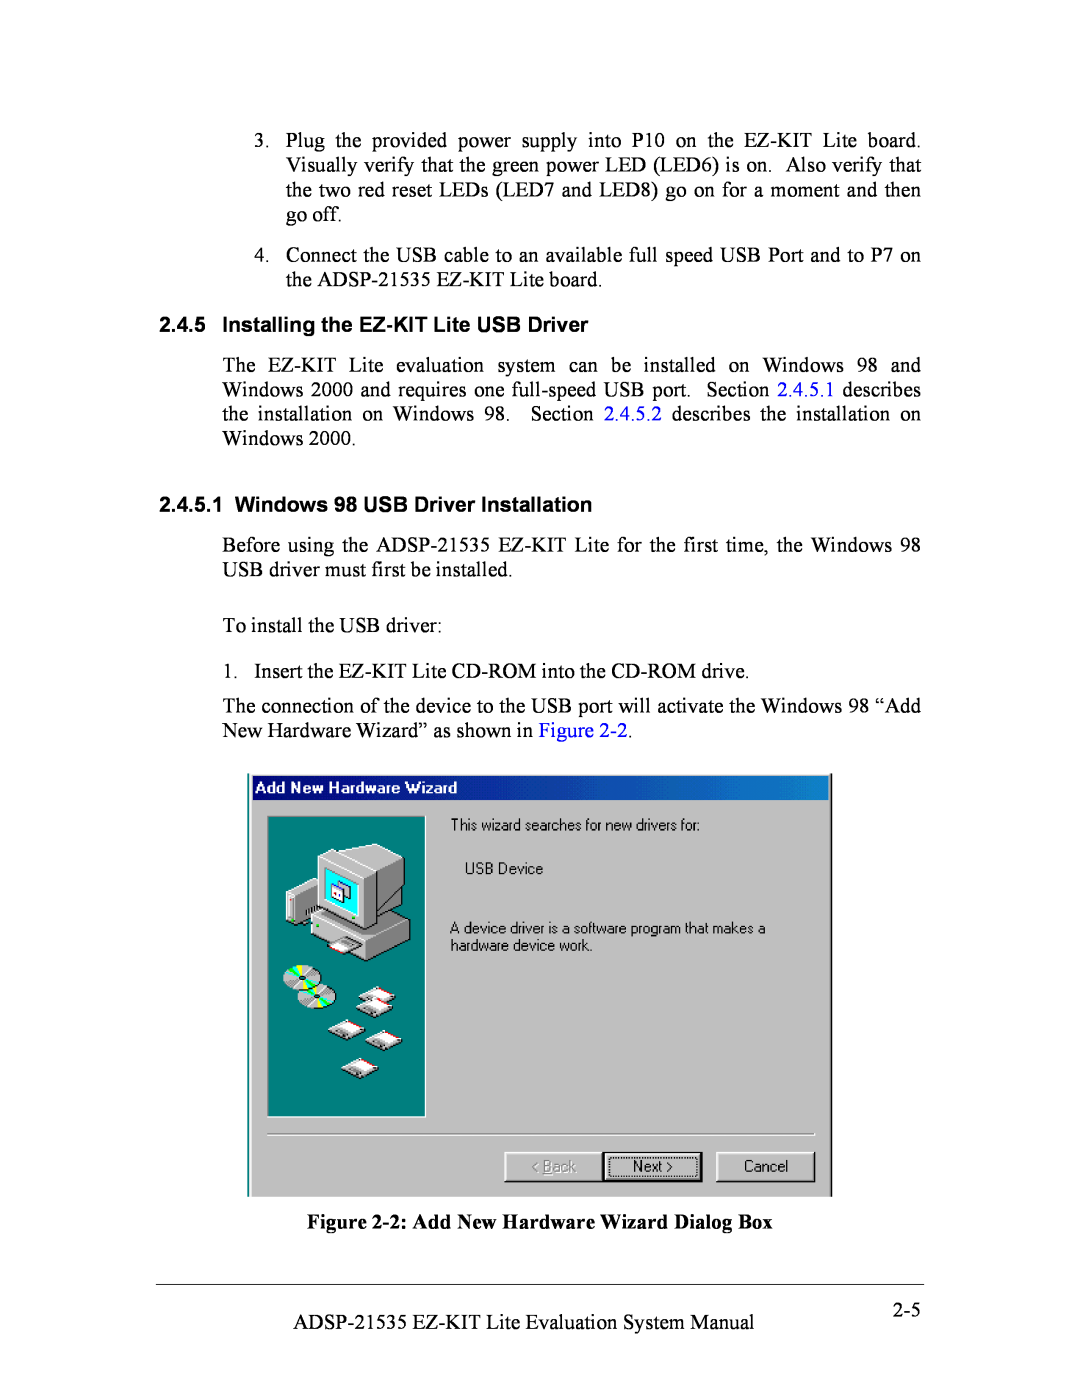 Analog Devices 82-0000603-01 system manual Installing the EZ-KIT Lite USB Driver, Windows 98 USB Driver Installation 